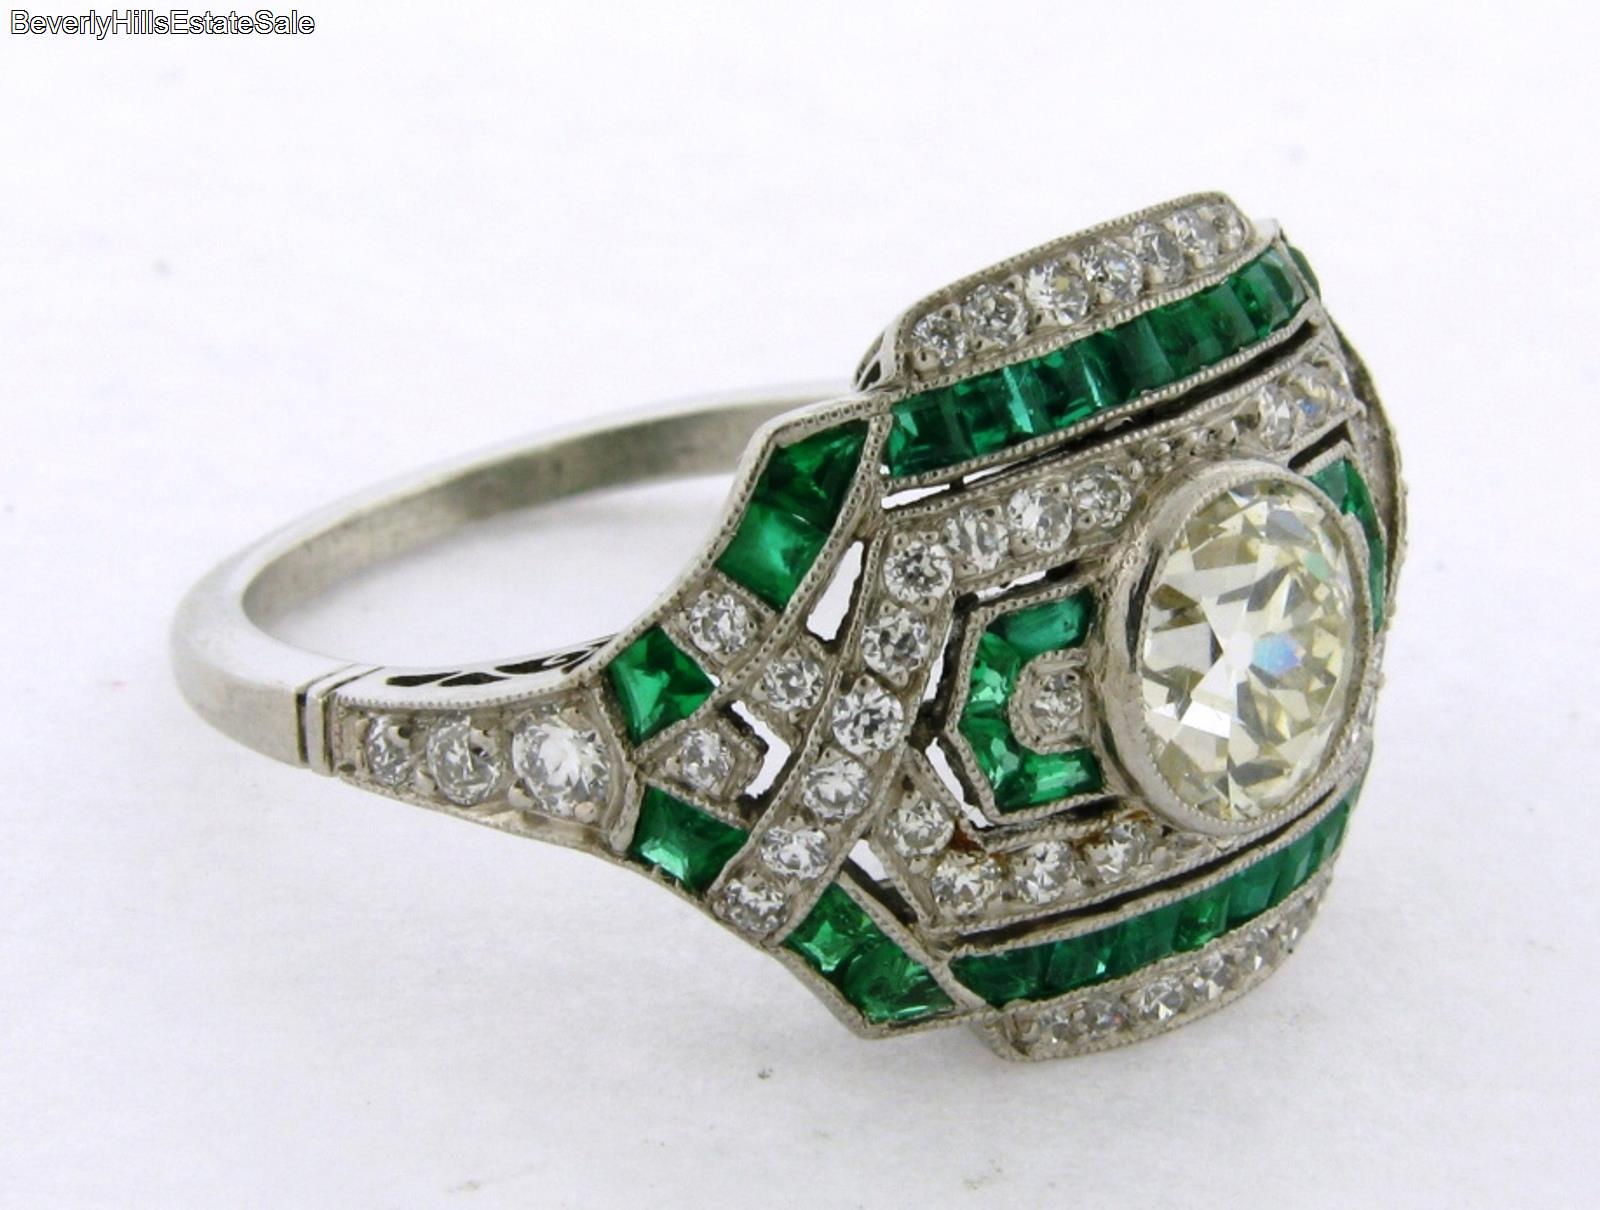 Stunning Art Deco Diamonds Emeralds 1.08 Center Platinum Ring | eBay